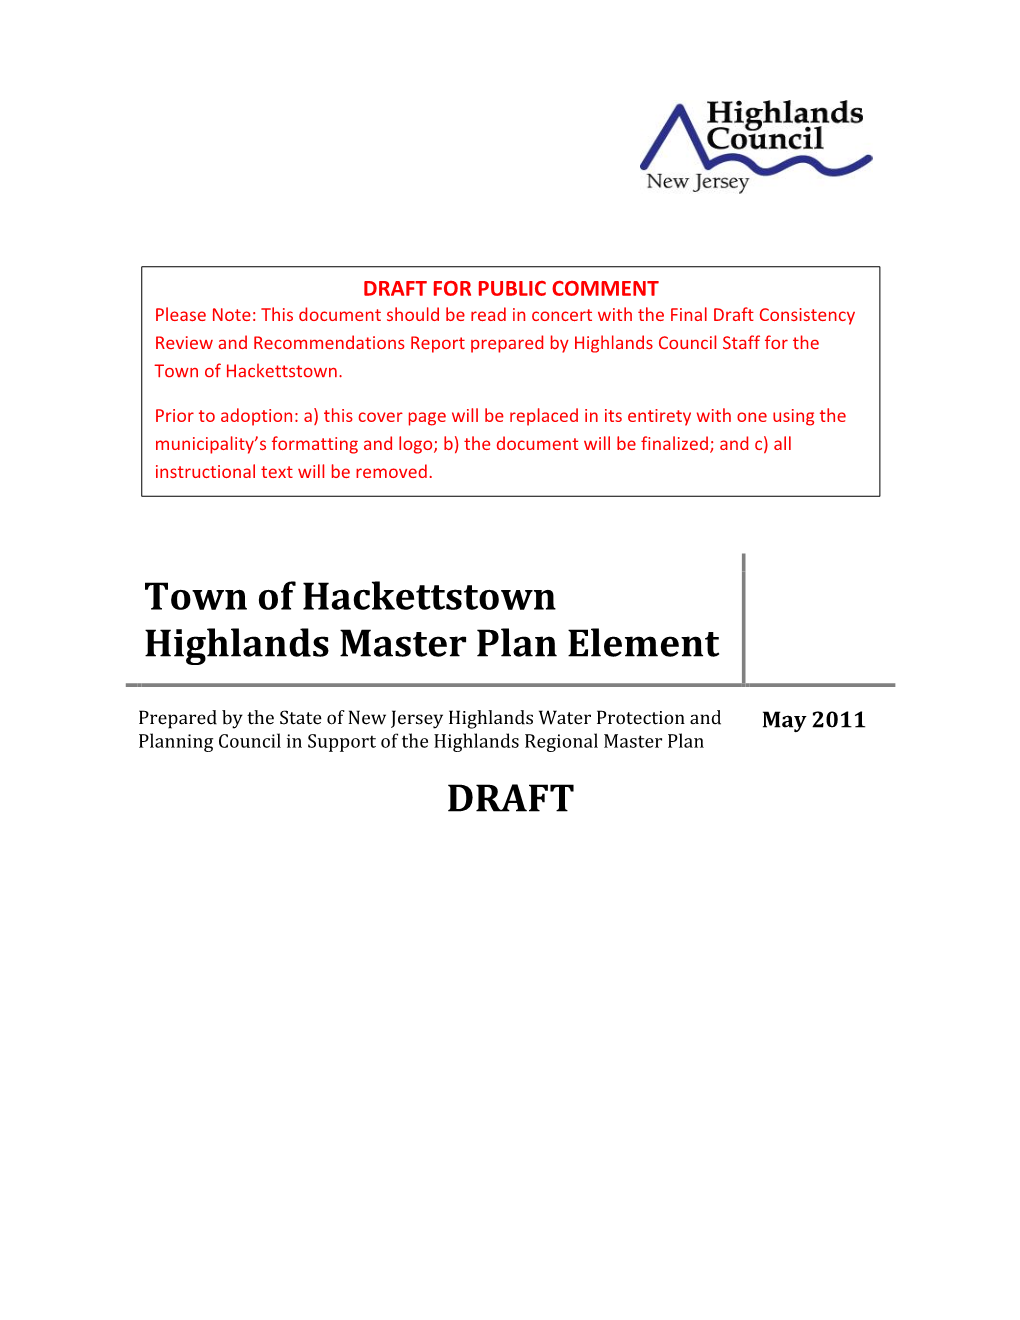 Town of Hackettstown Highlands Master Plan Element DRAFT